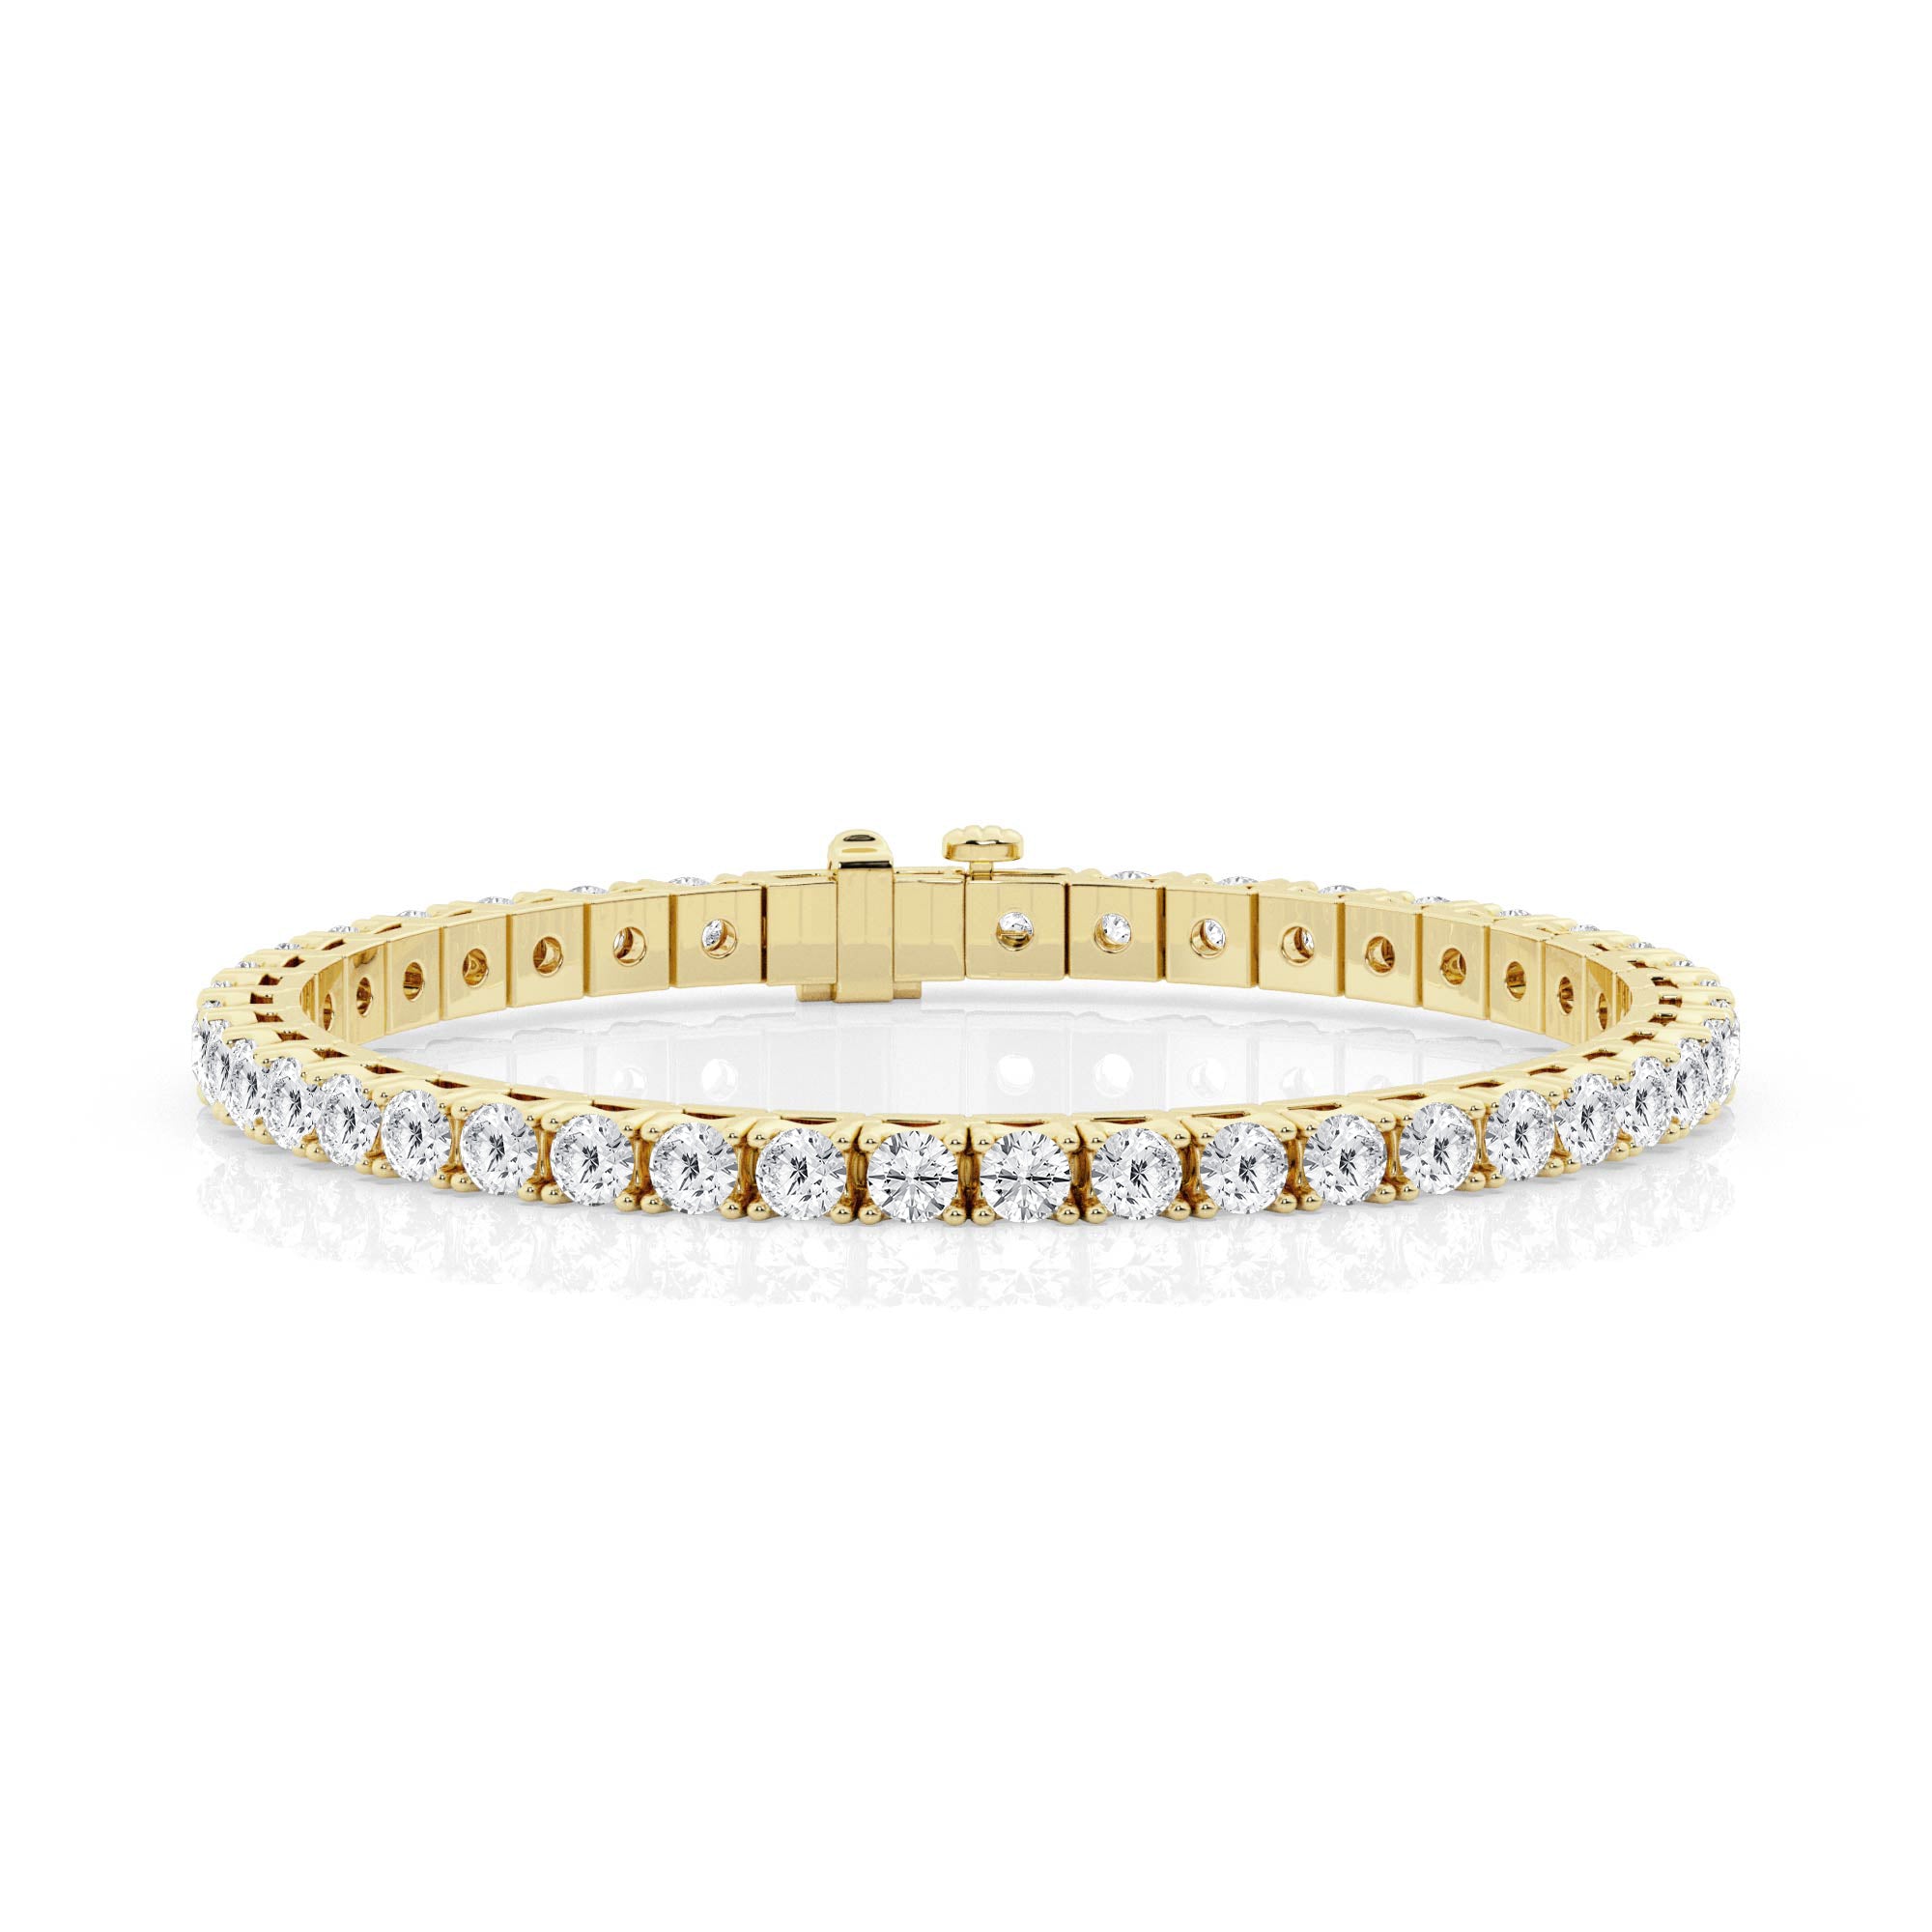 8 carat Diamond Tennis Bracelet